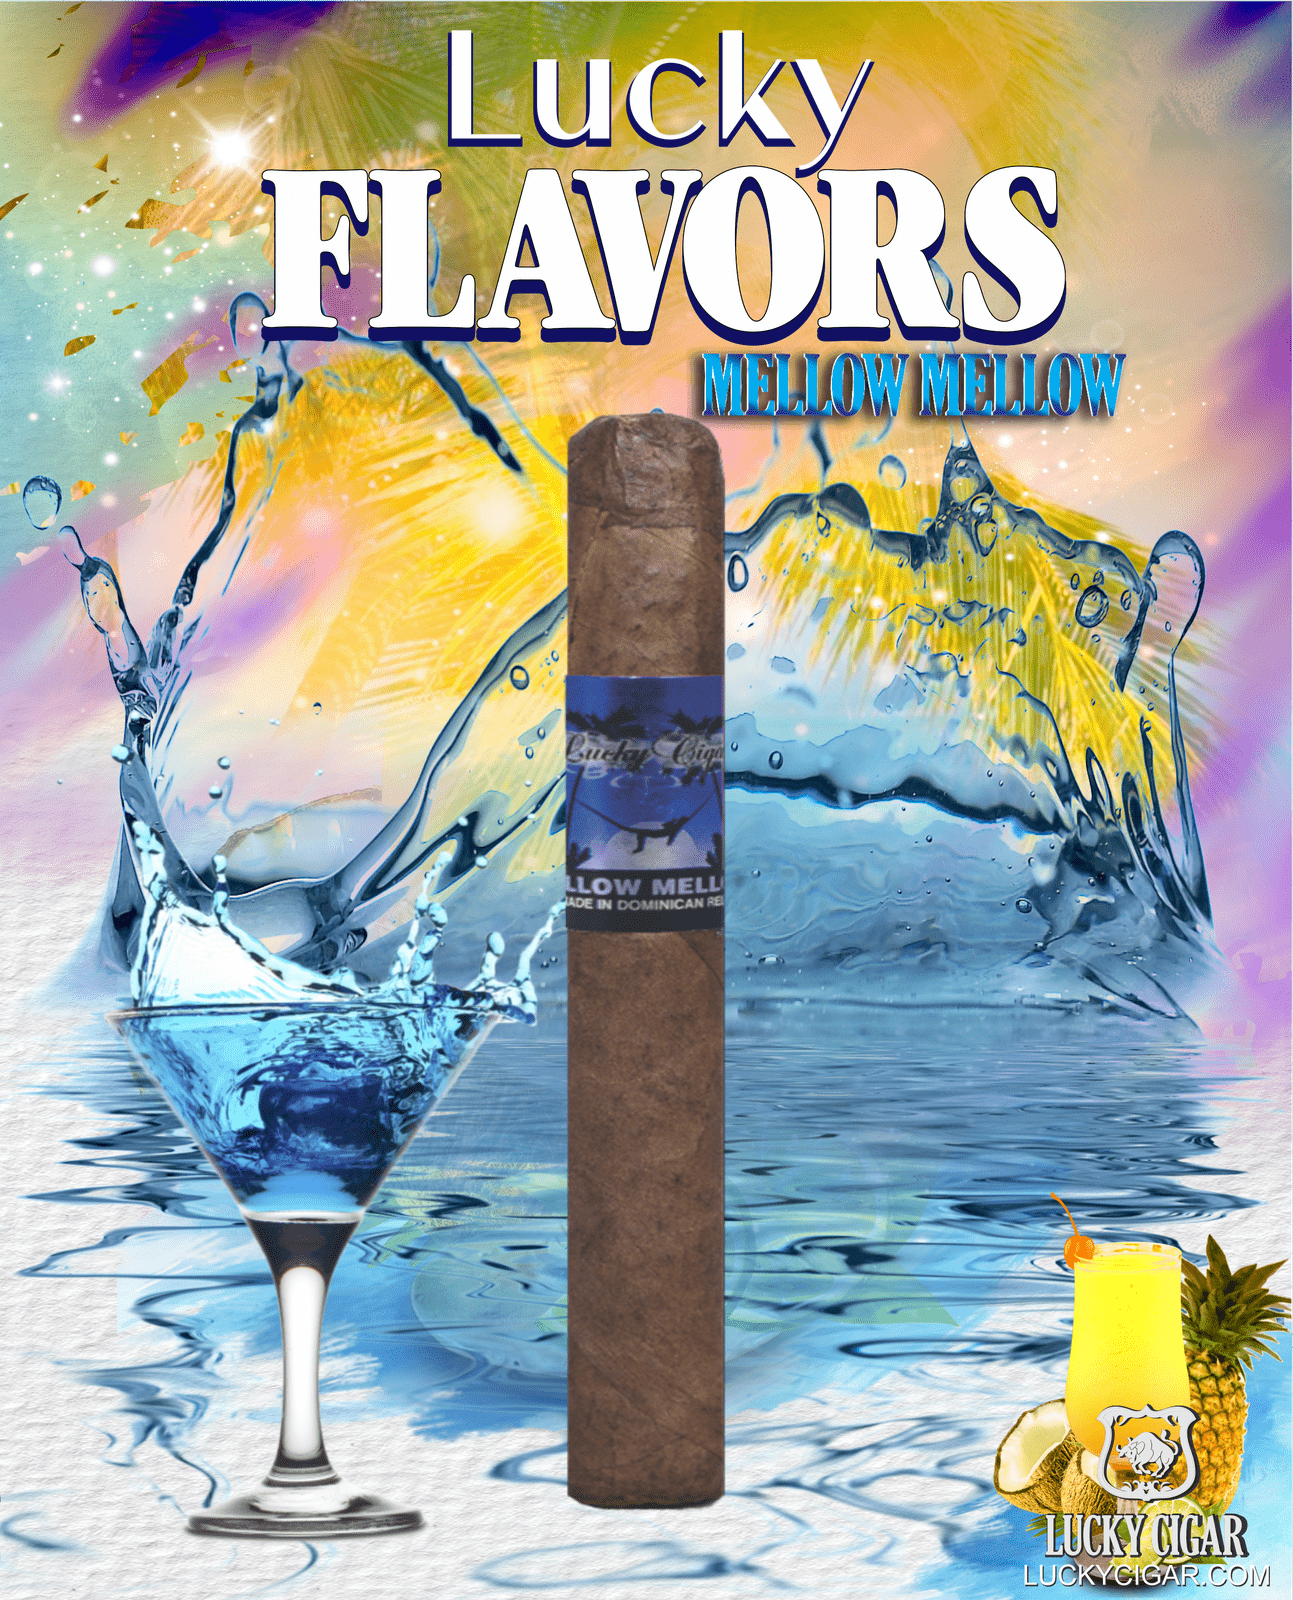 Flavored Cigars: Lucky Flavors Mellow Mellow 5x42 Cigar